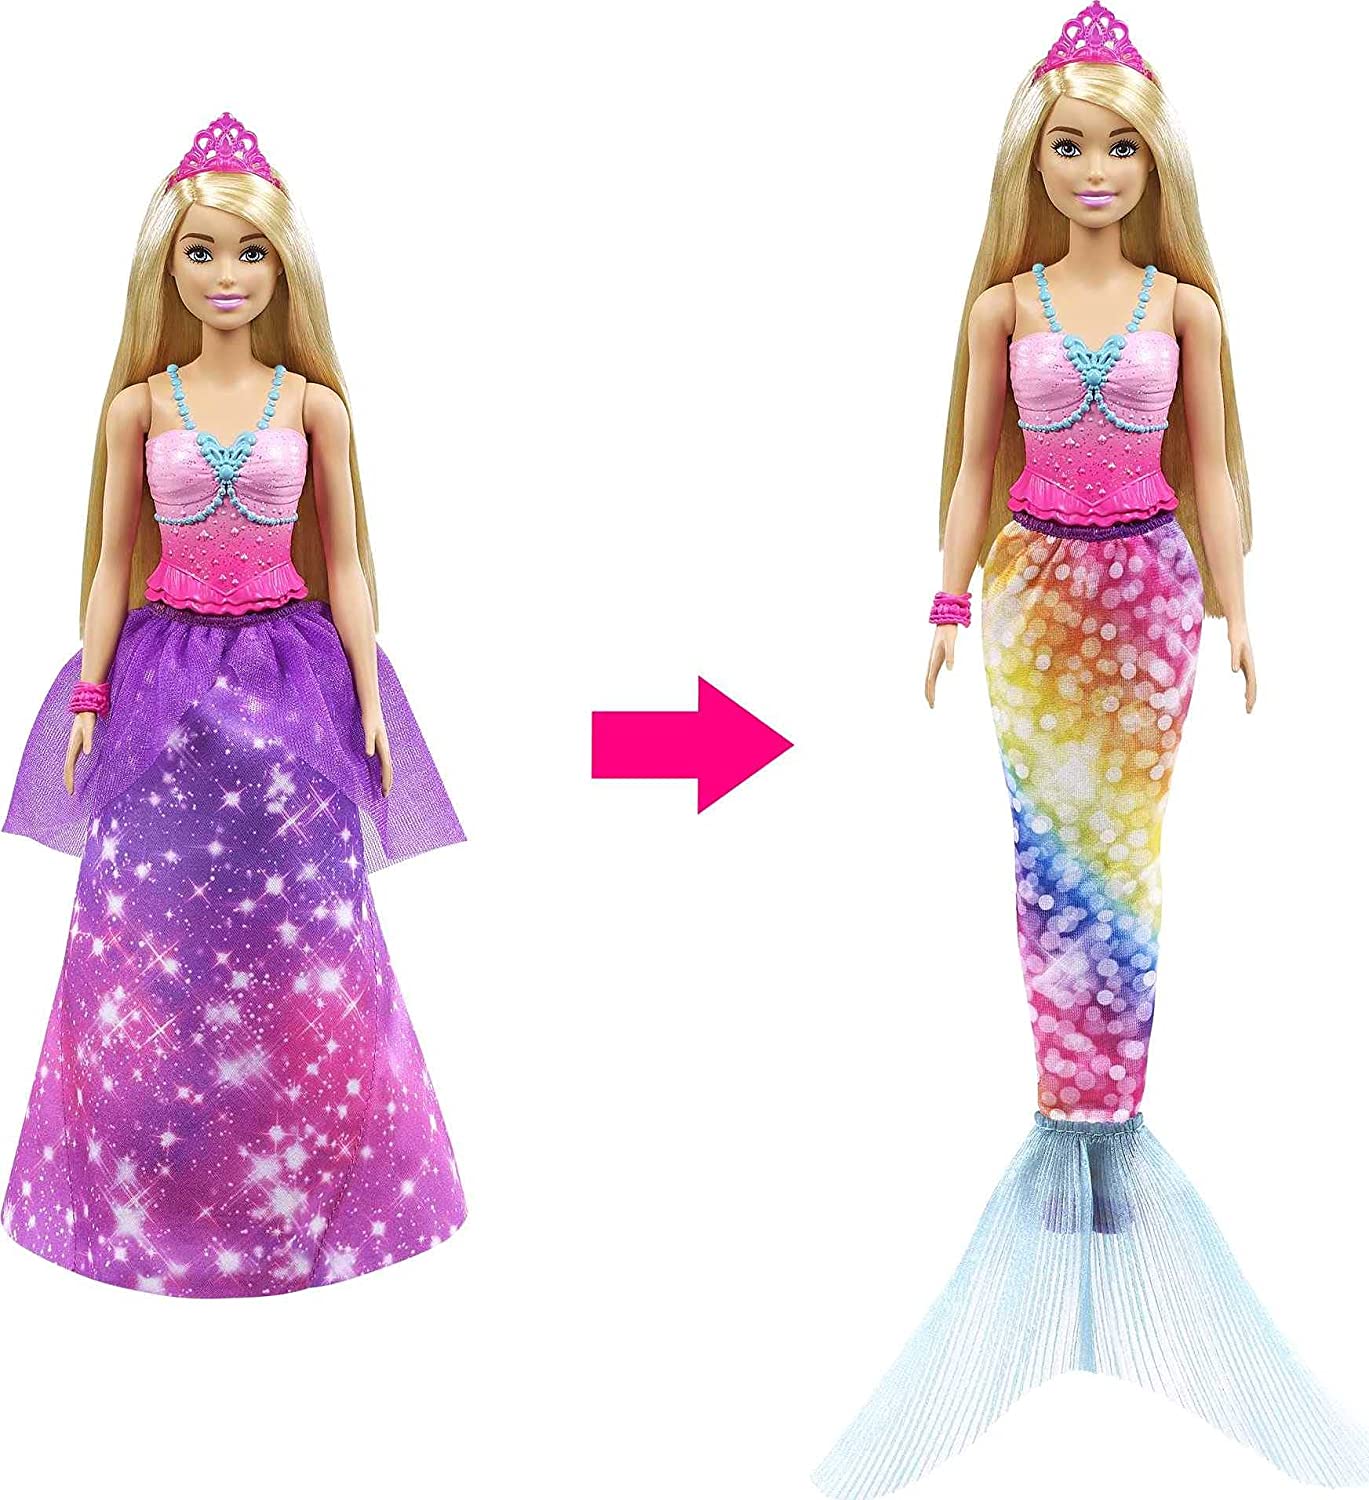 Barbie Dreamtopia - Princesa 2 em 1